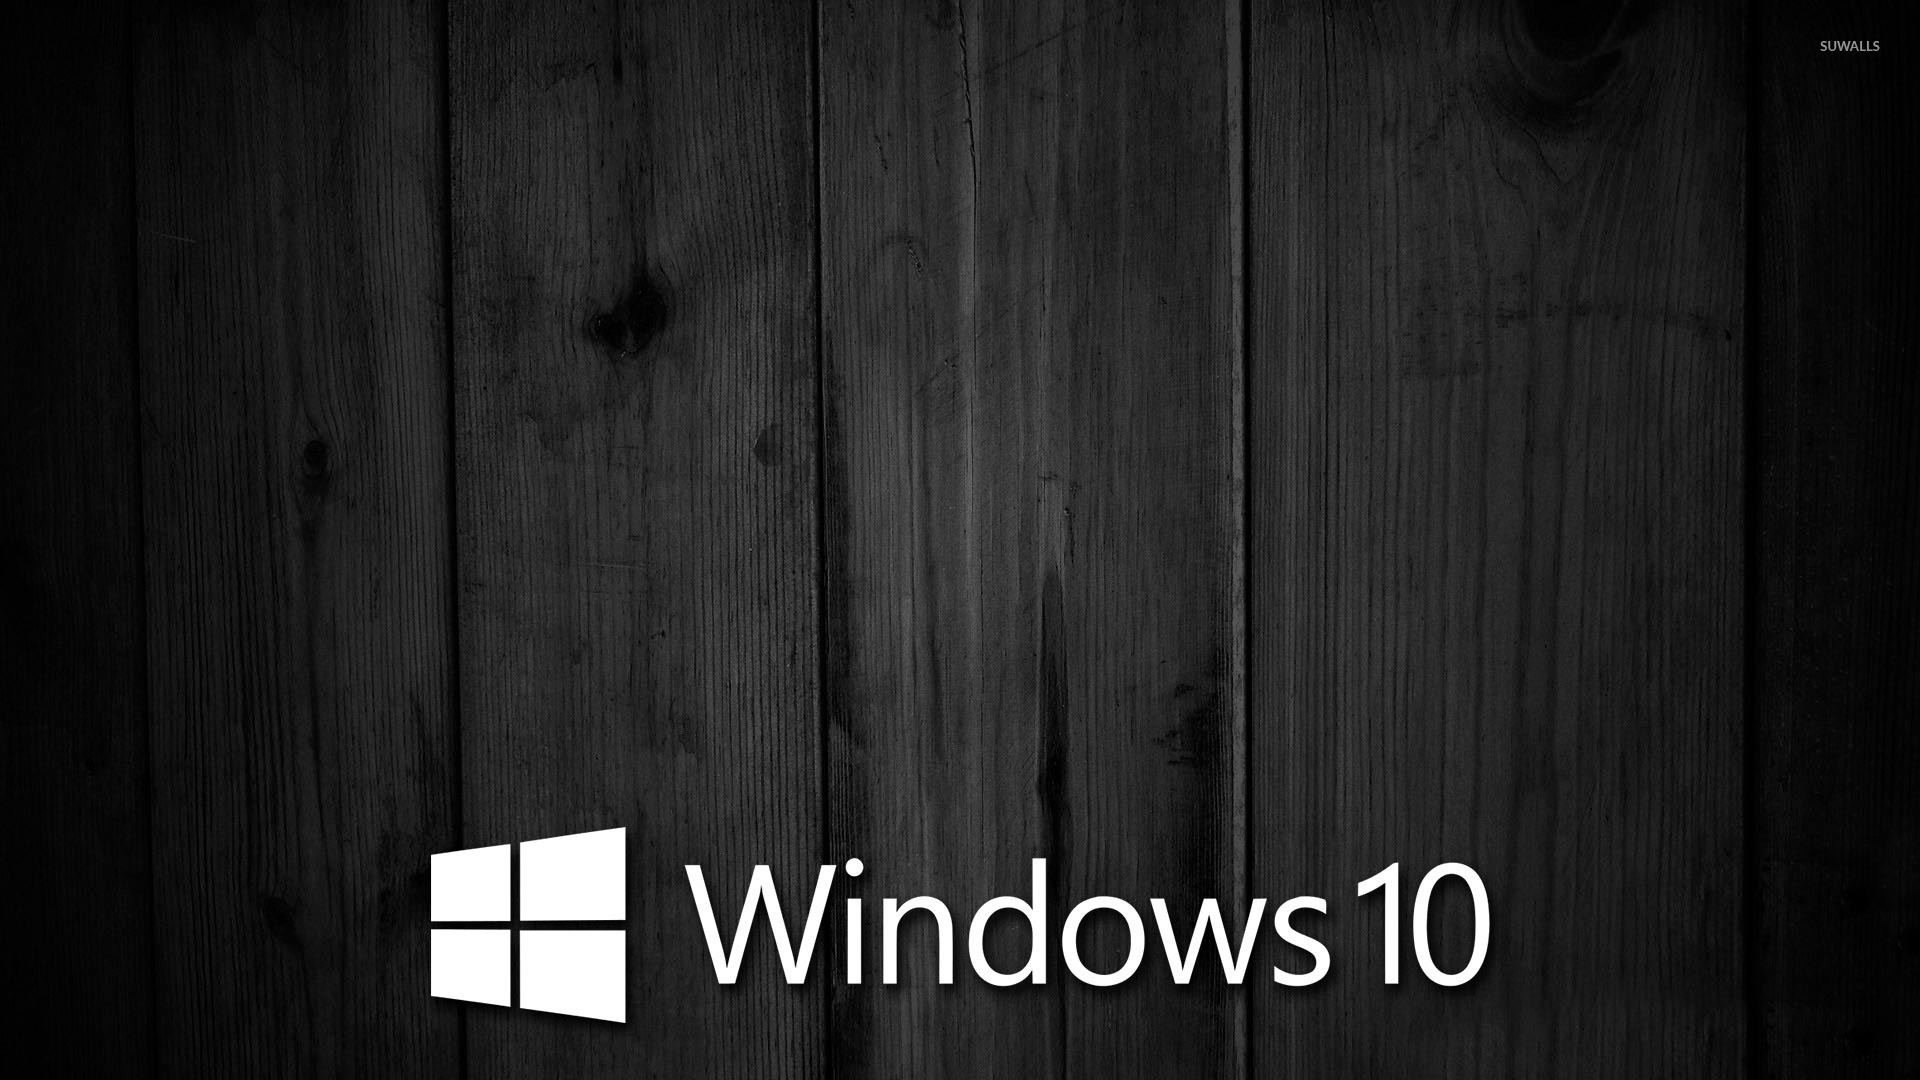 1920x1080 Windows 10 on black wooden panels [6] wallpaper